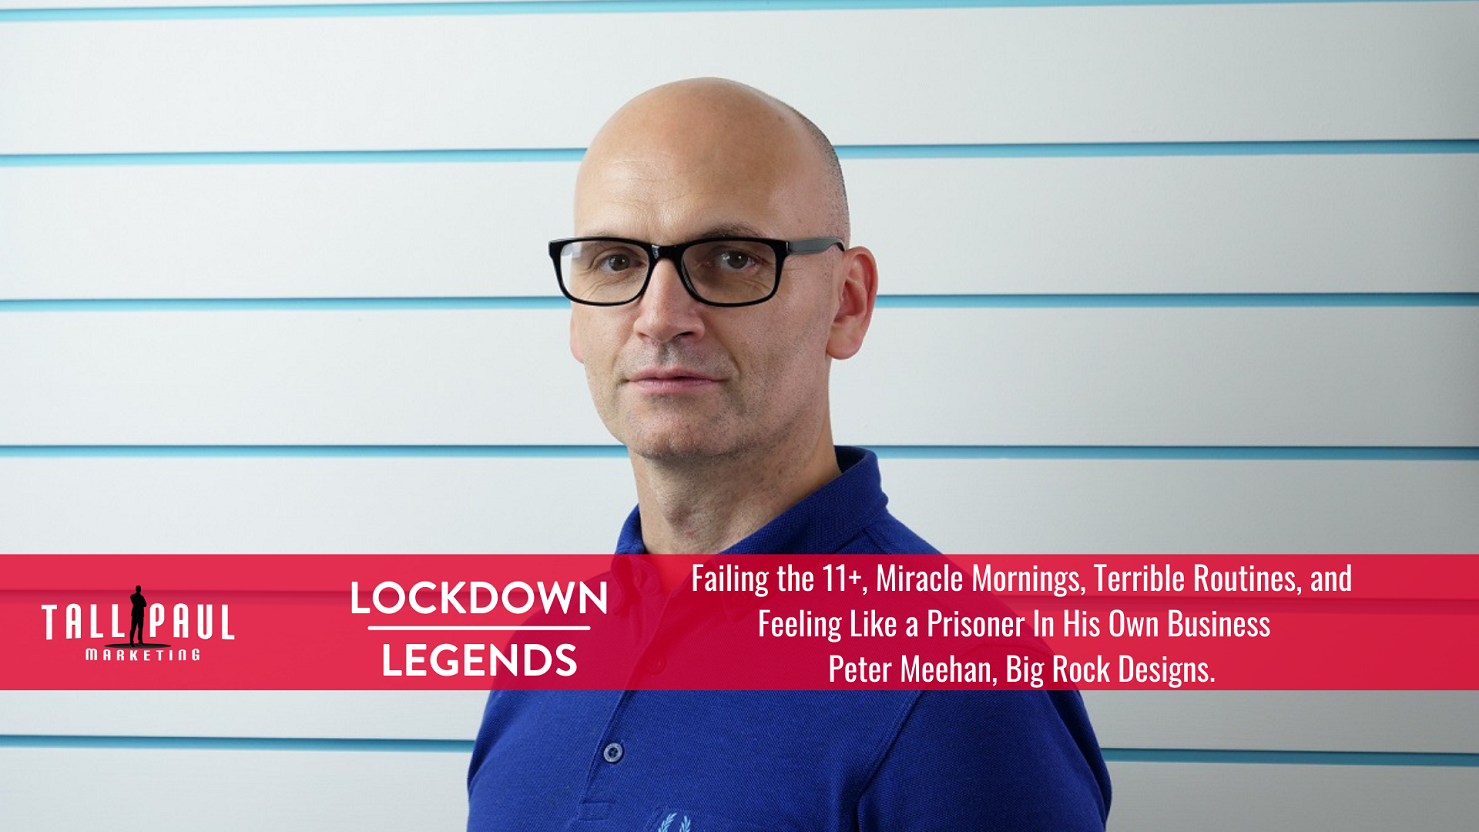 Lockdown Legends Peter Meehan, Big Rock Designs - Freelance Belfast copywriter and web content writer - Tall Paul Marketing